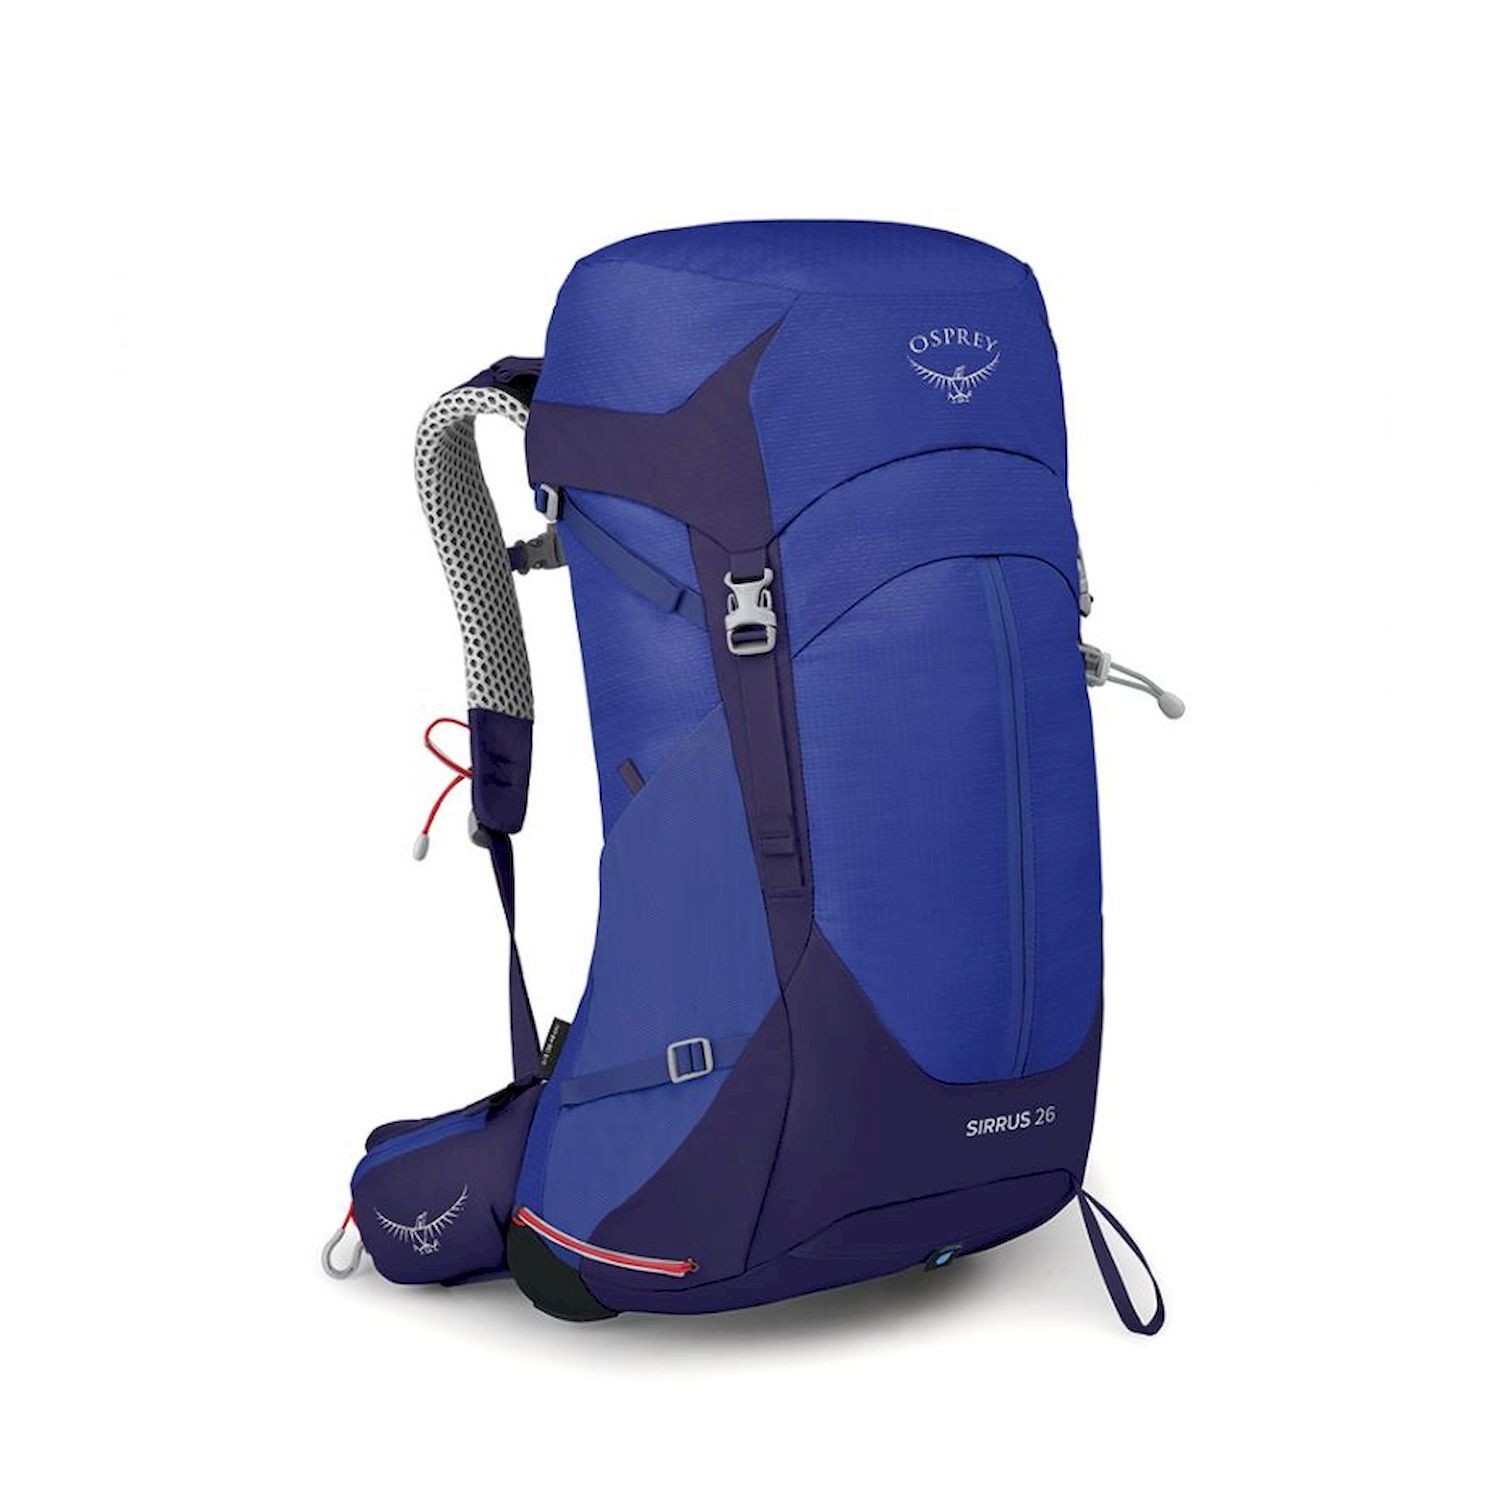 Osprey Sirrus Plus 26 - Walking backpack - Women's